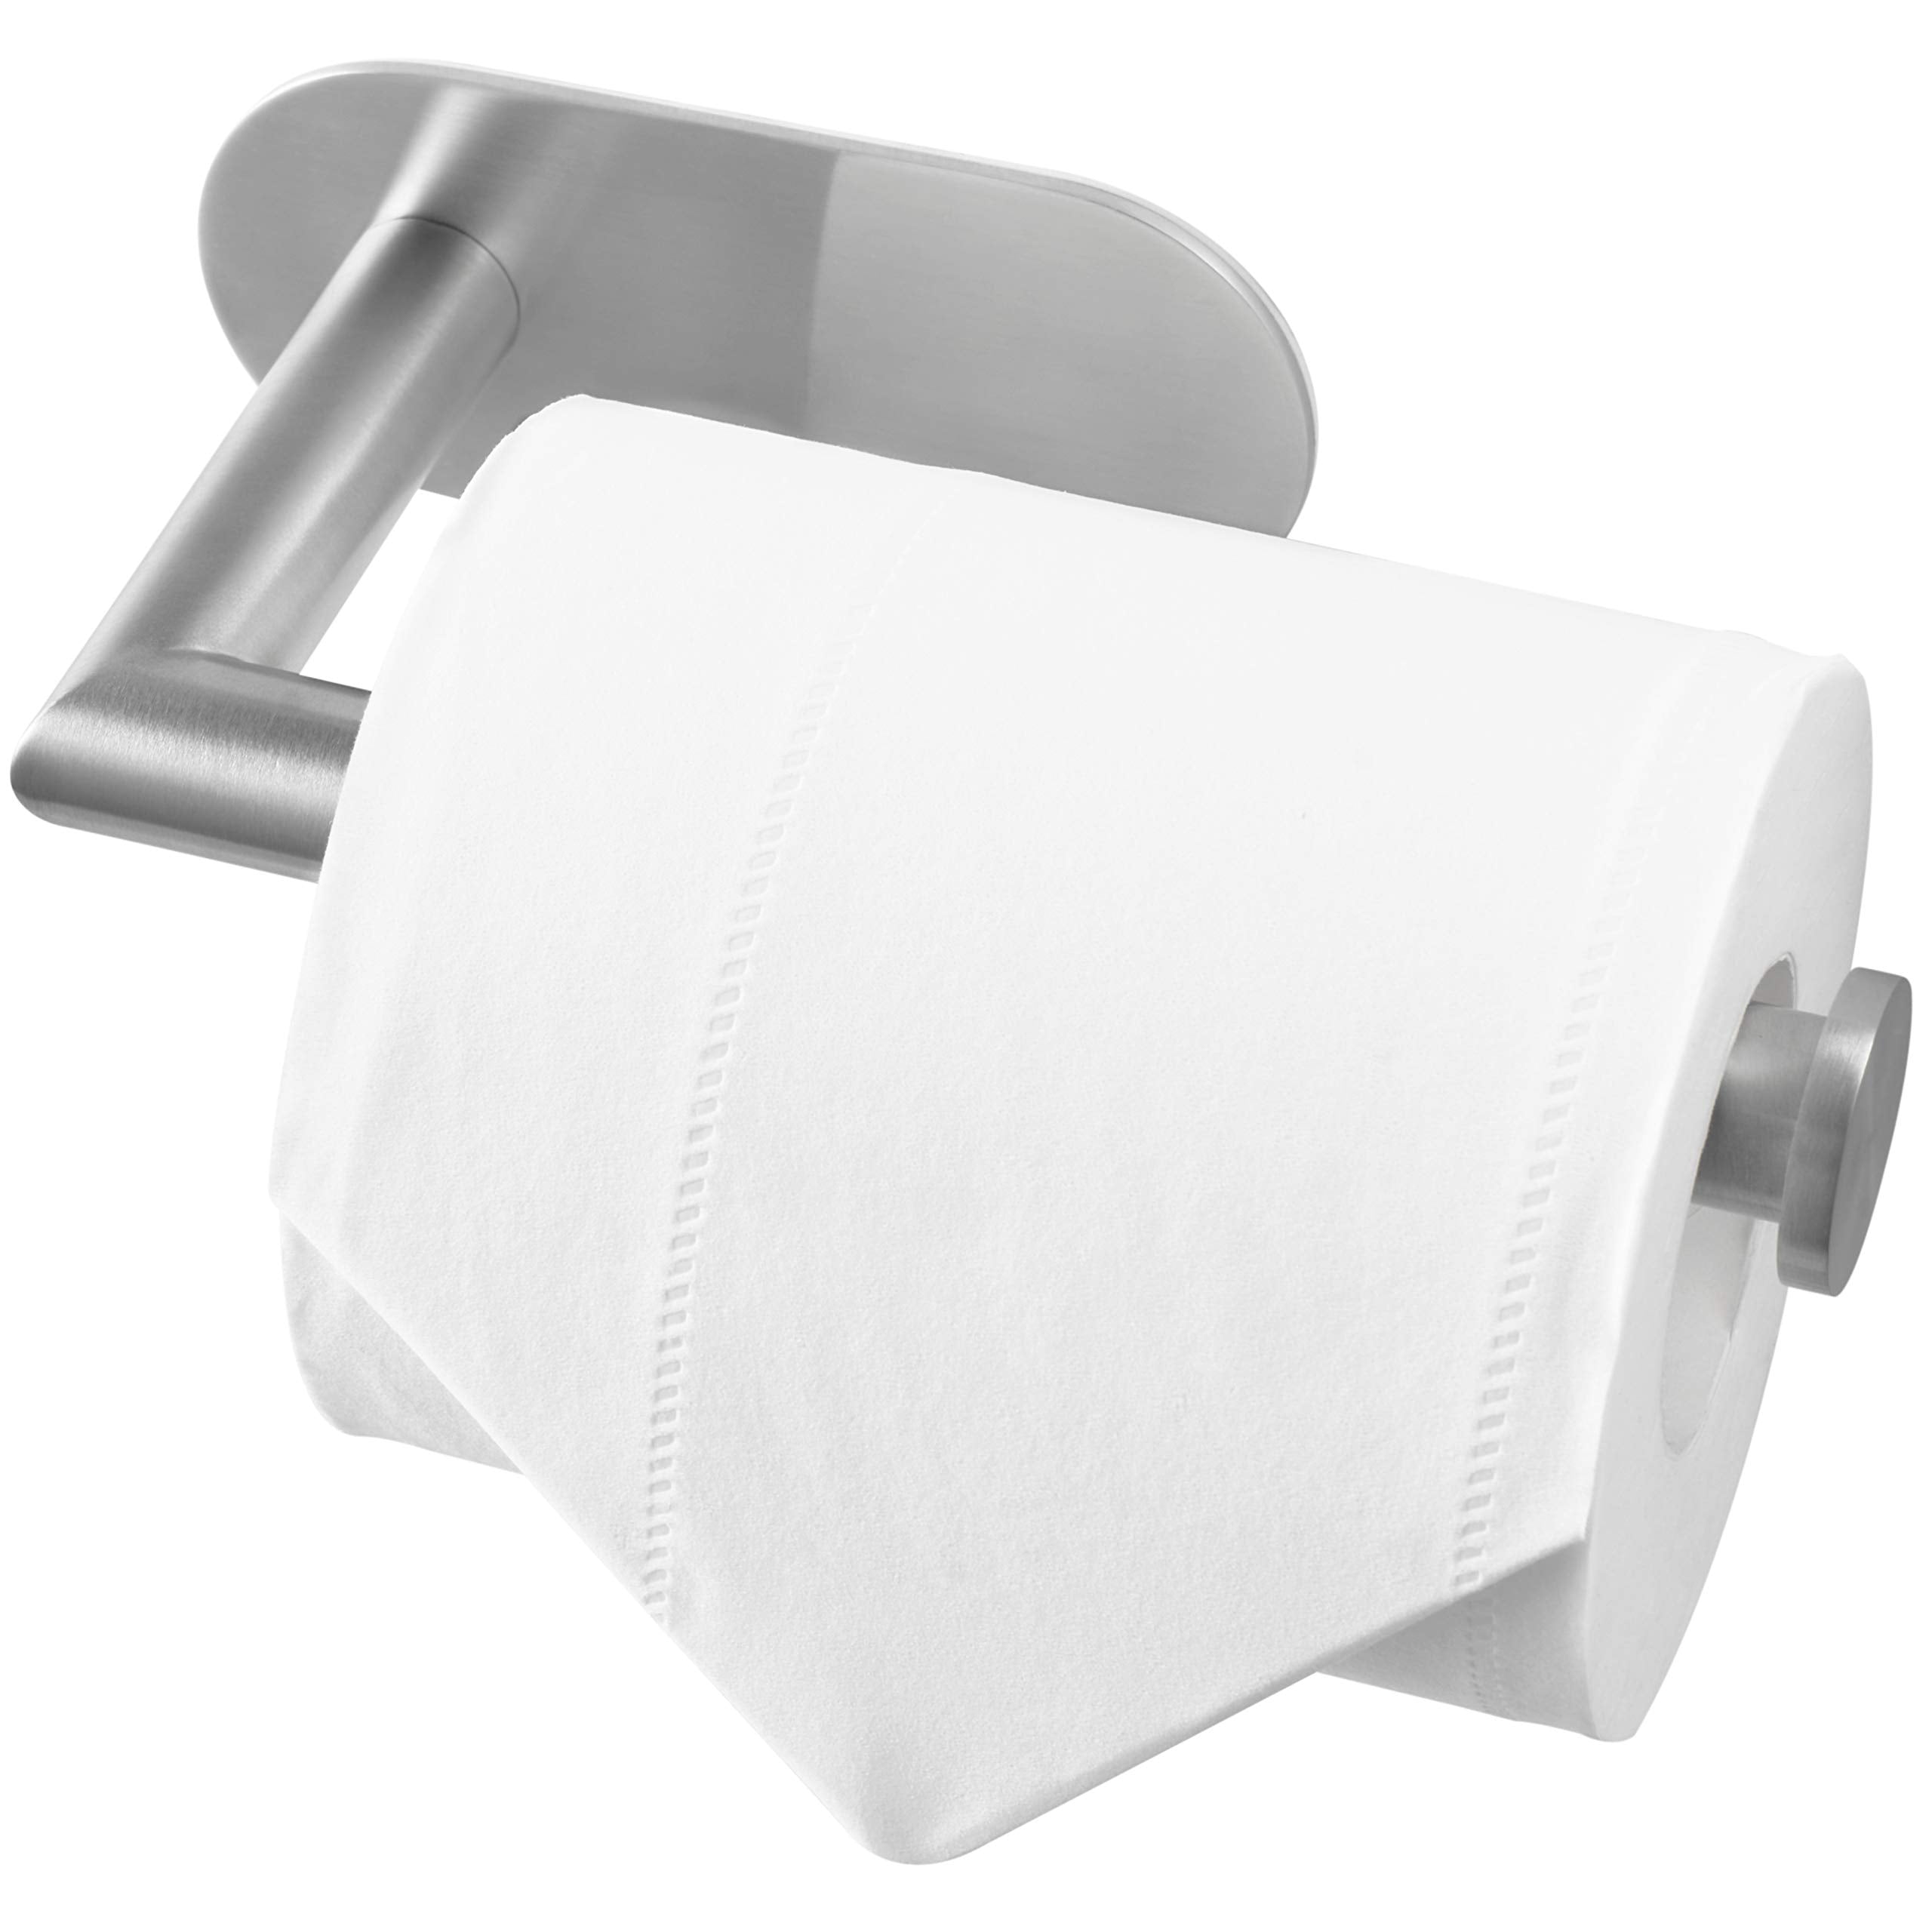 SUS 304 Easy Assemble Bathroom Black Toilet Paper Holder Free